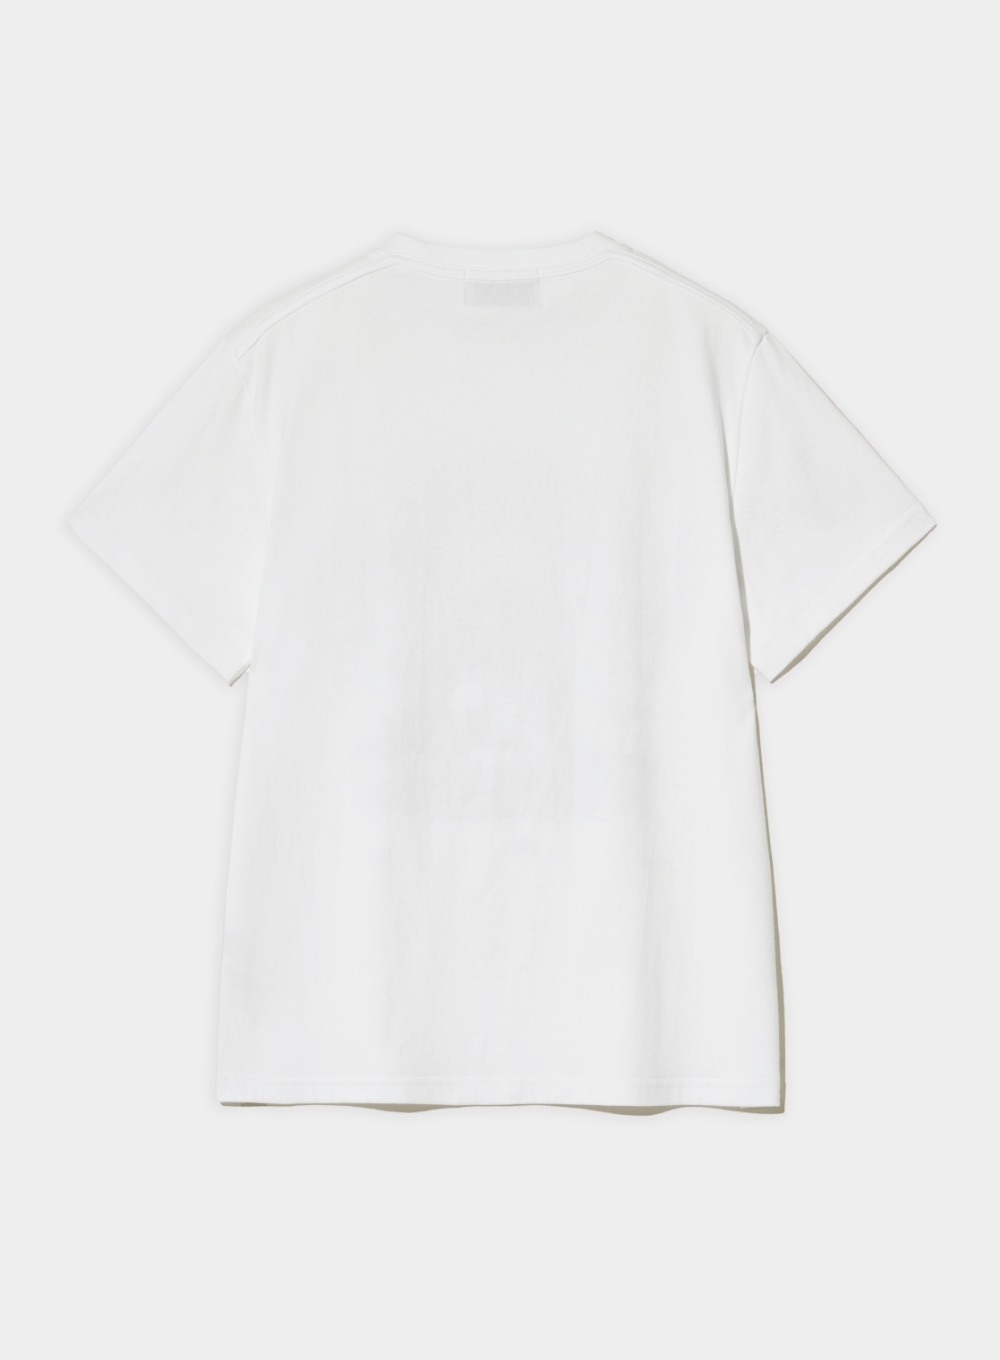 (W) Paris Metro Graphic T-Shirt - White Navy